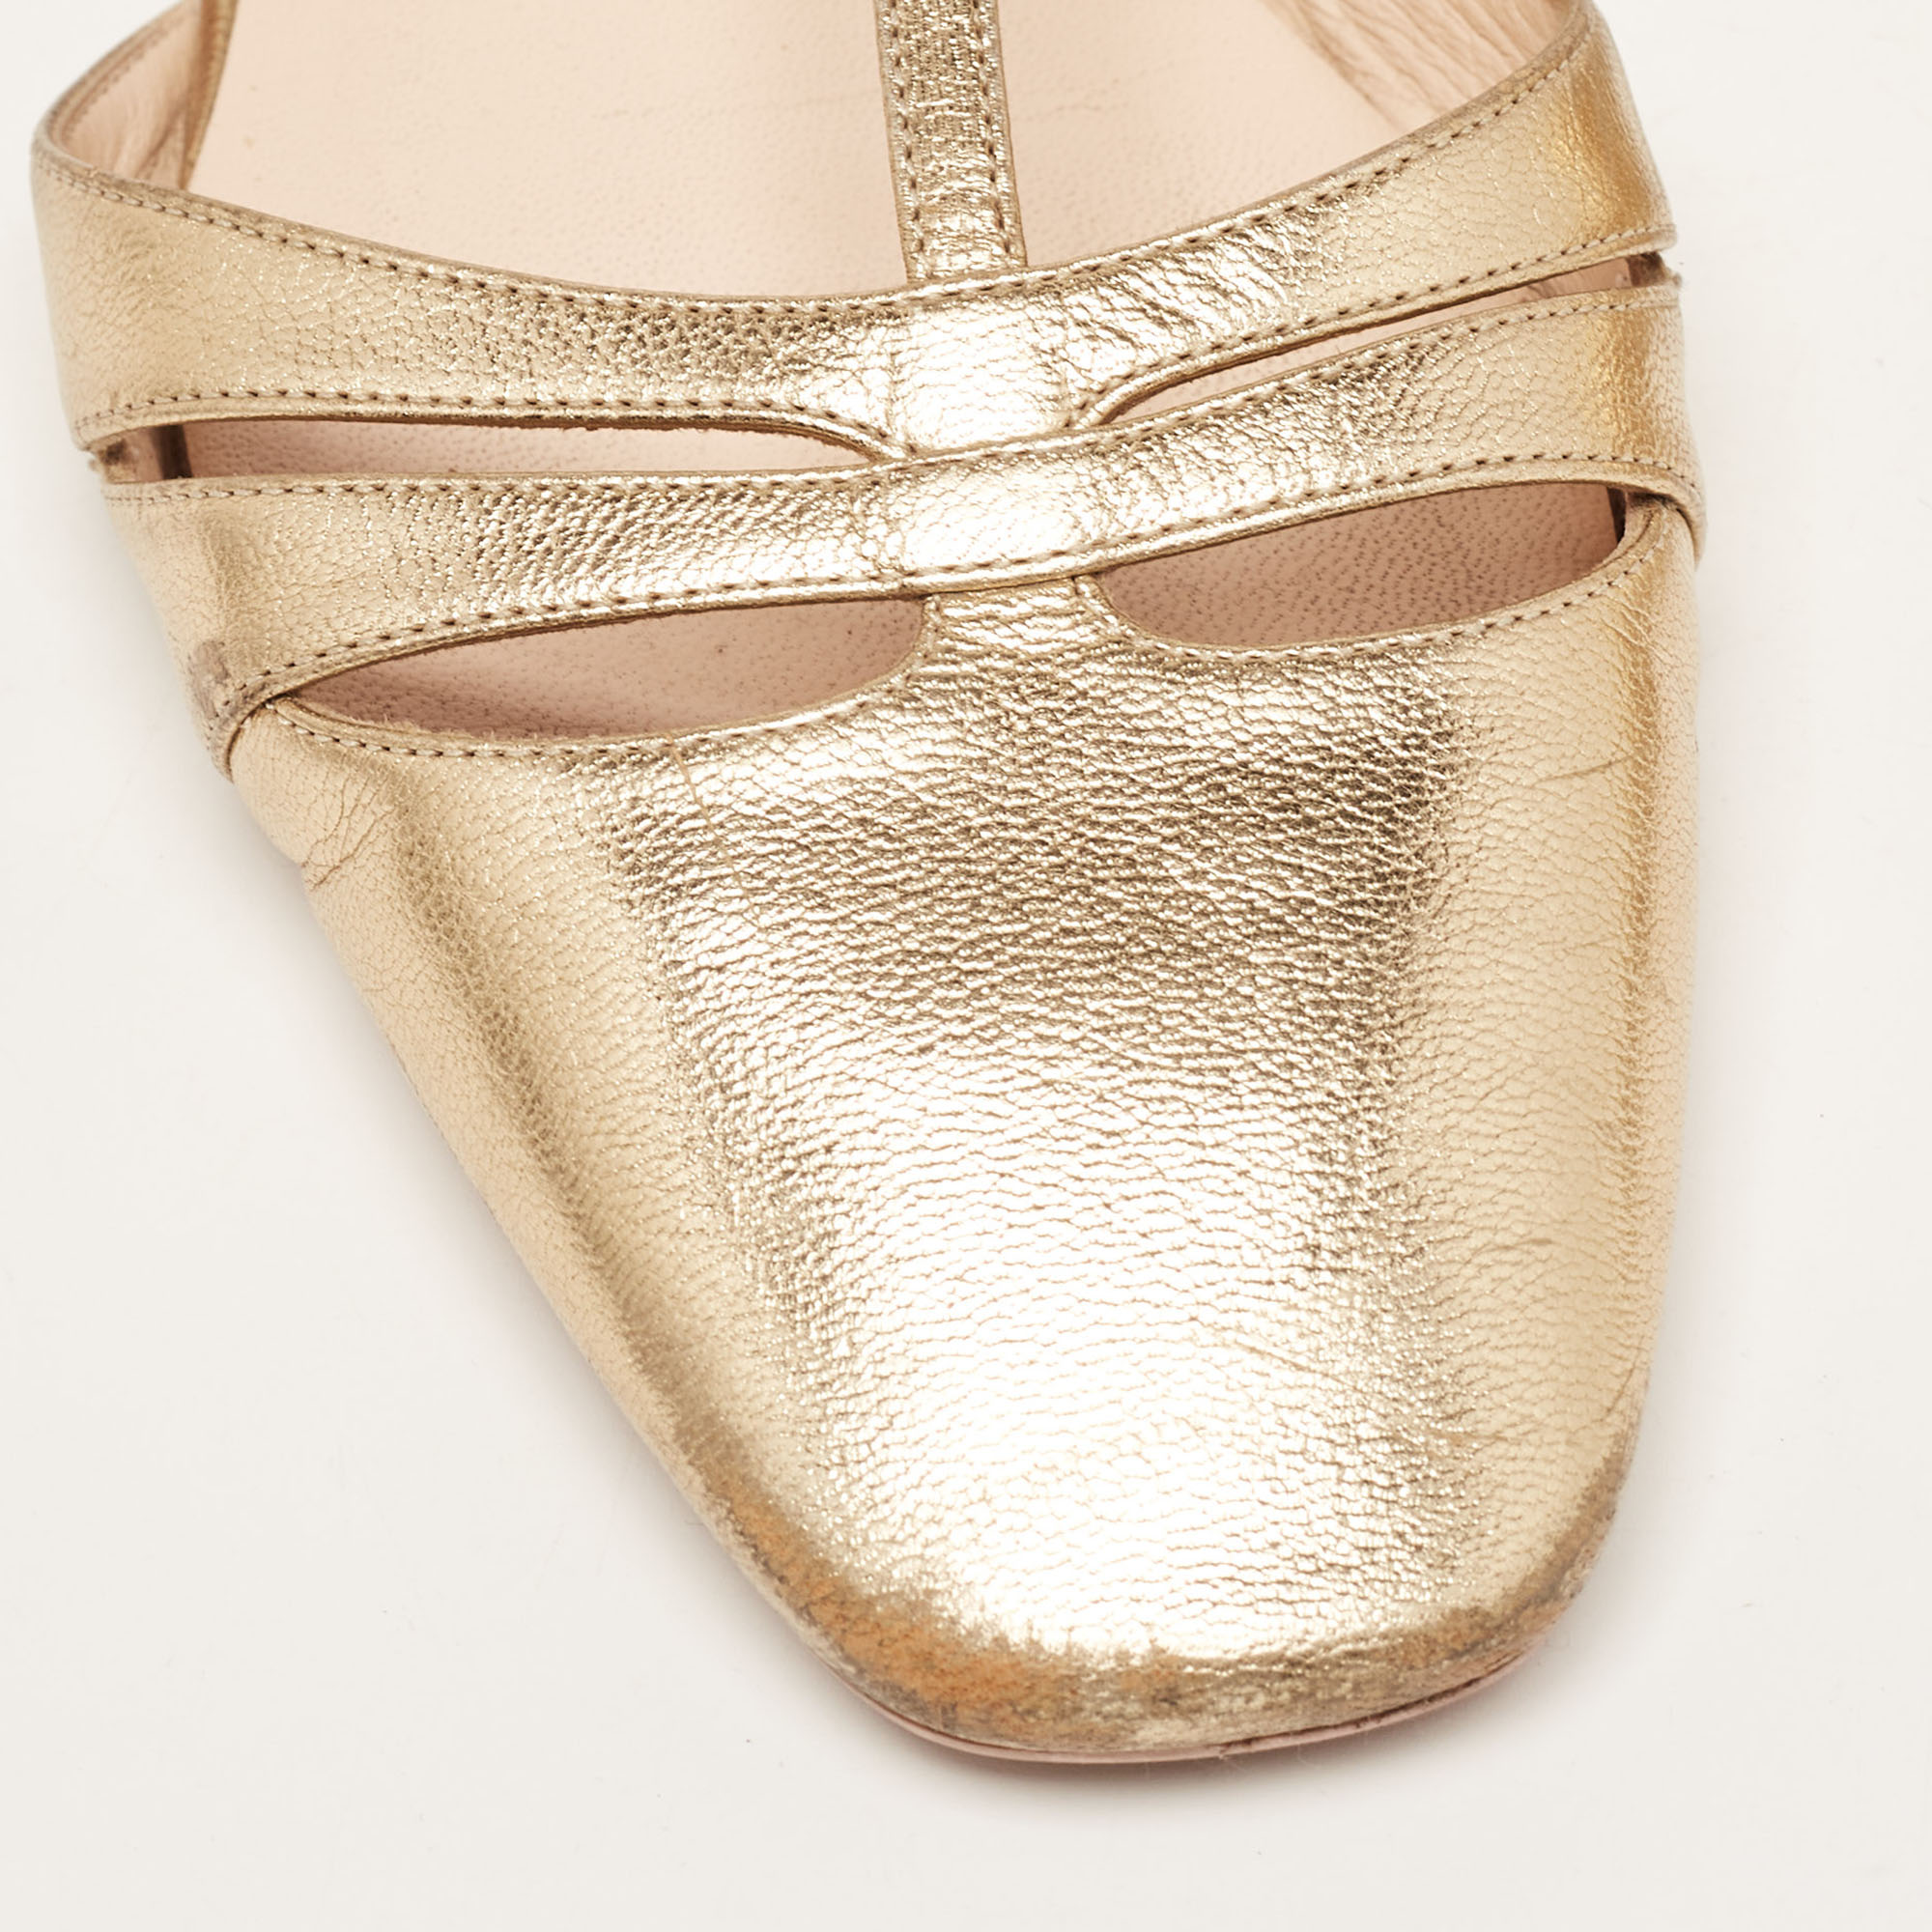 Fendi Gold Leather T-Strap Flat Sandals Size 38